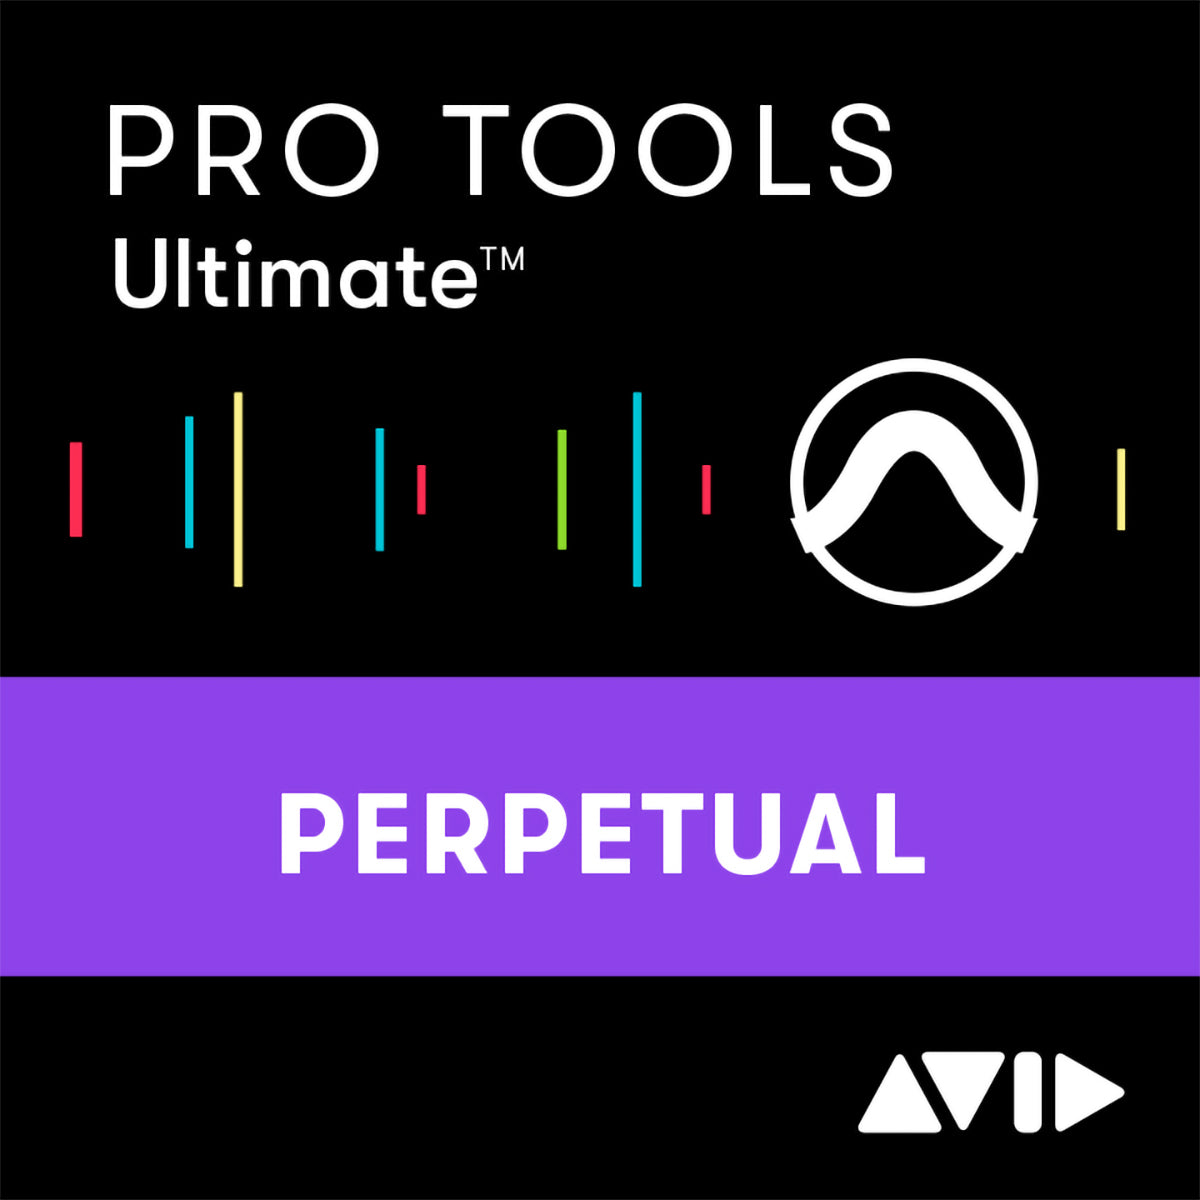 Avid Pro Tools Ultimate Perpetual Upgrade – was Pro Tools Ultimate Perpetual Updates + Support Plan Renewal